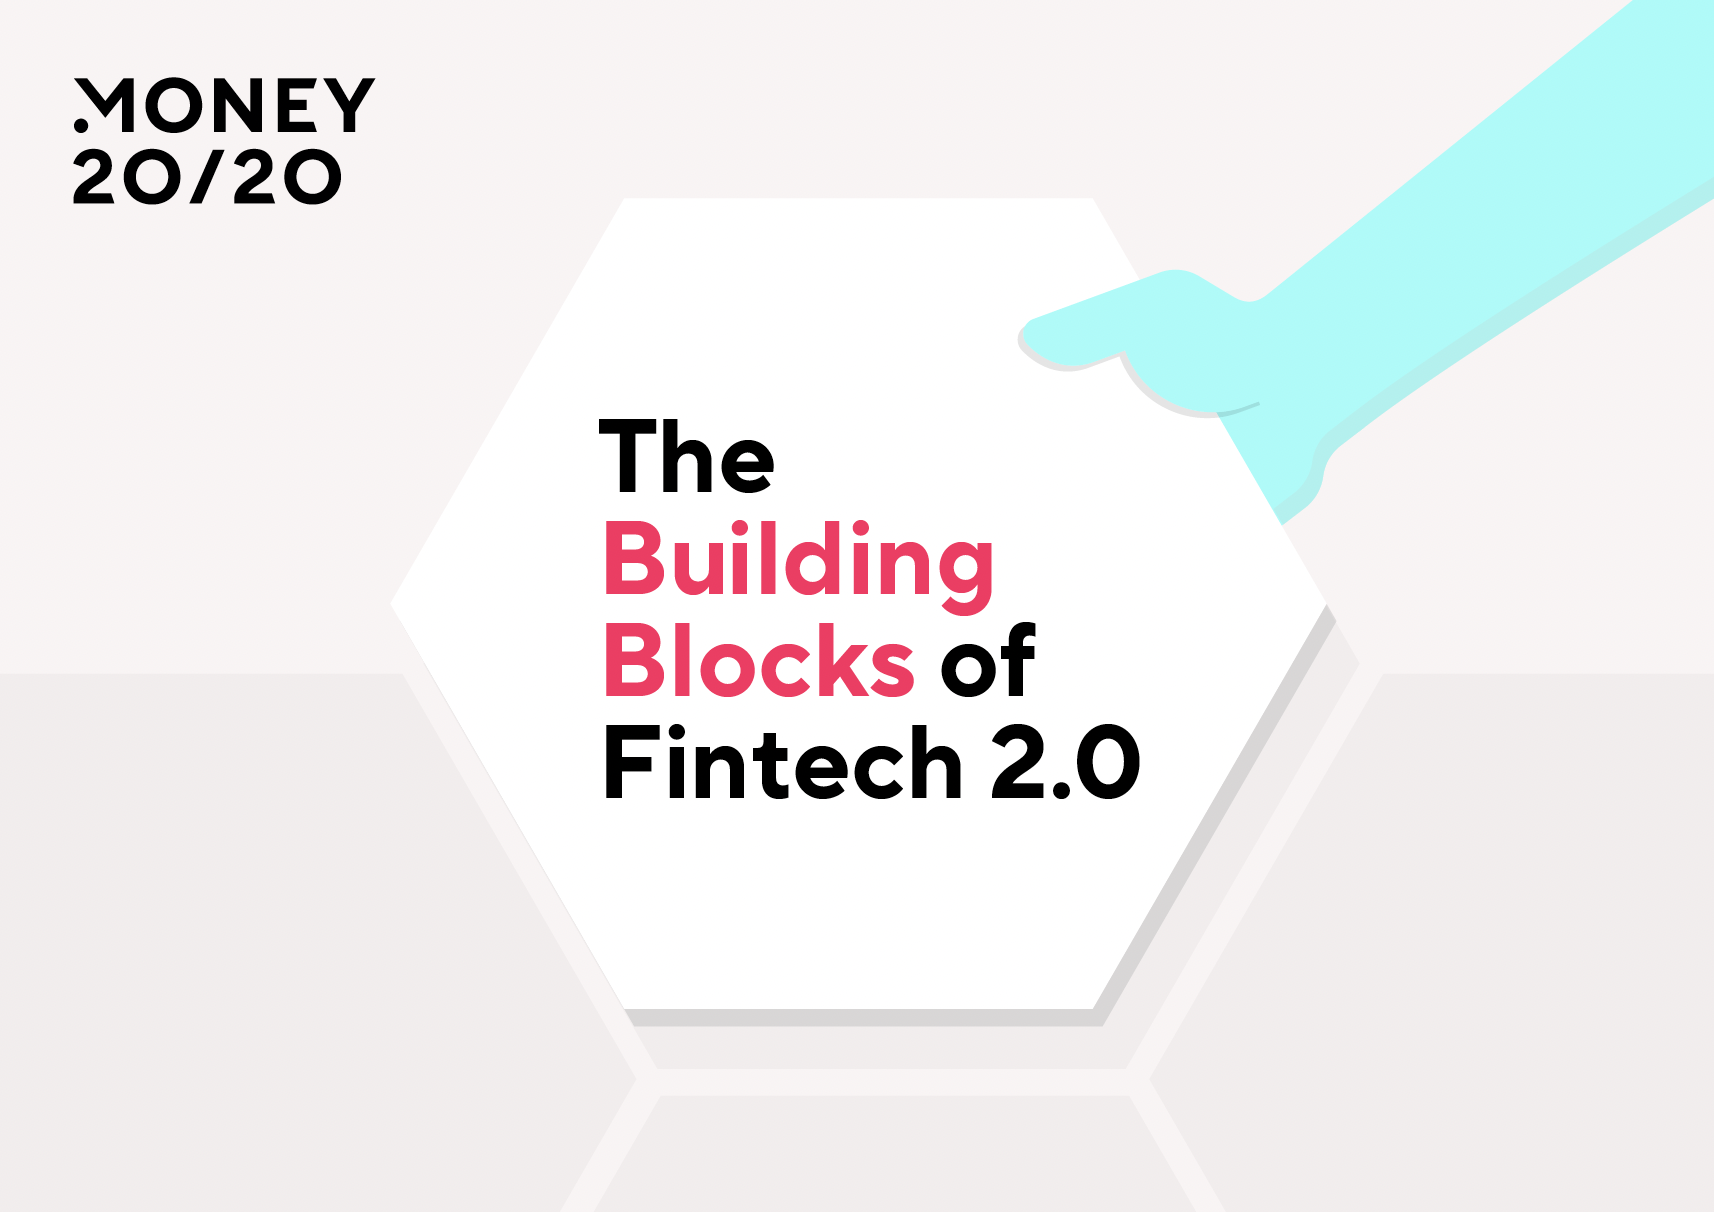 https://ai4.io/blog/2021/08/11/money-20/20-the-building-blocks-of-fintech-2.0/